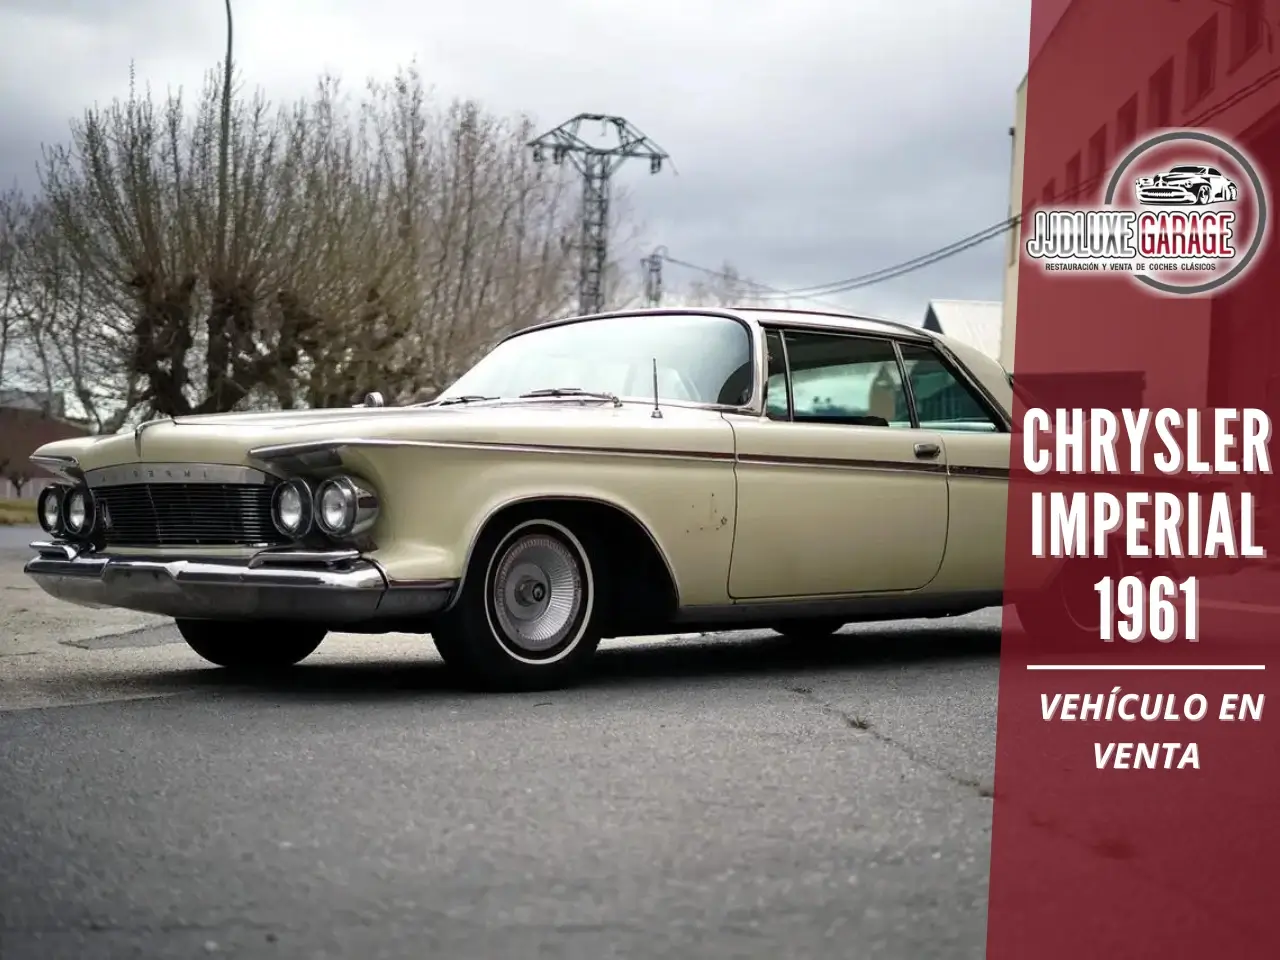 chrysler-imperial-1961-segunda-mano-en-venta-comprar-coche-clasico-jjdluxe-garage-ibi-alicante-destacada